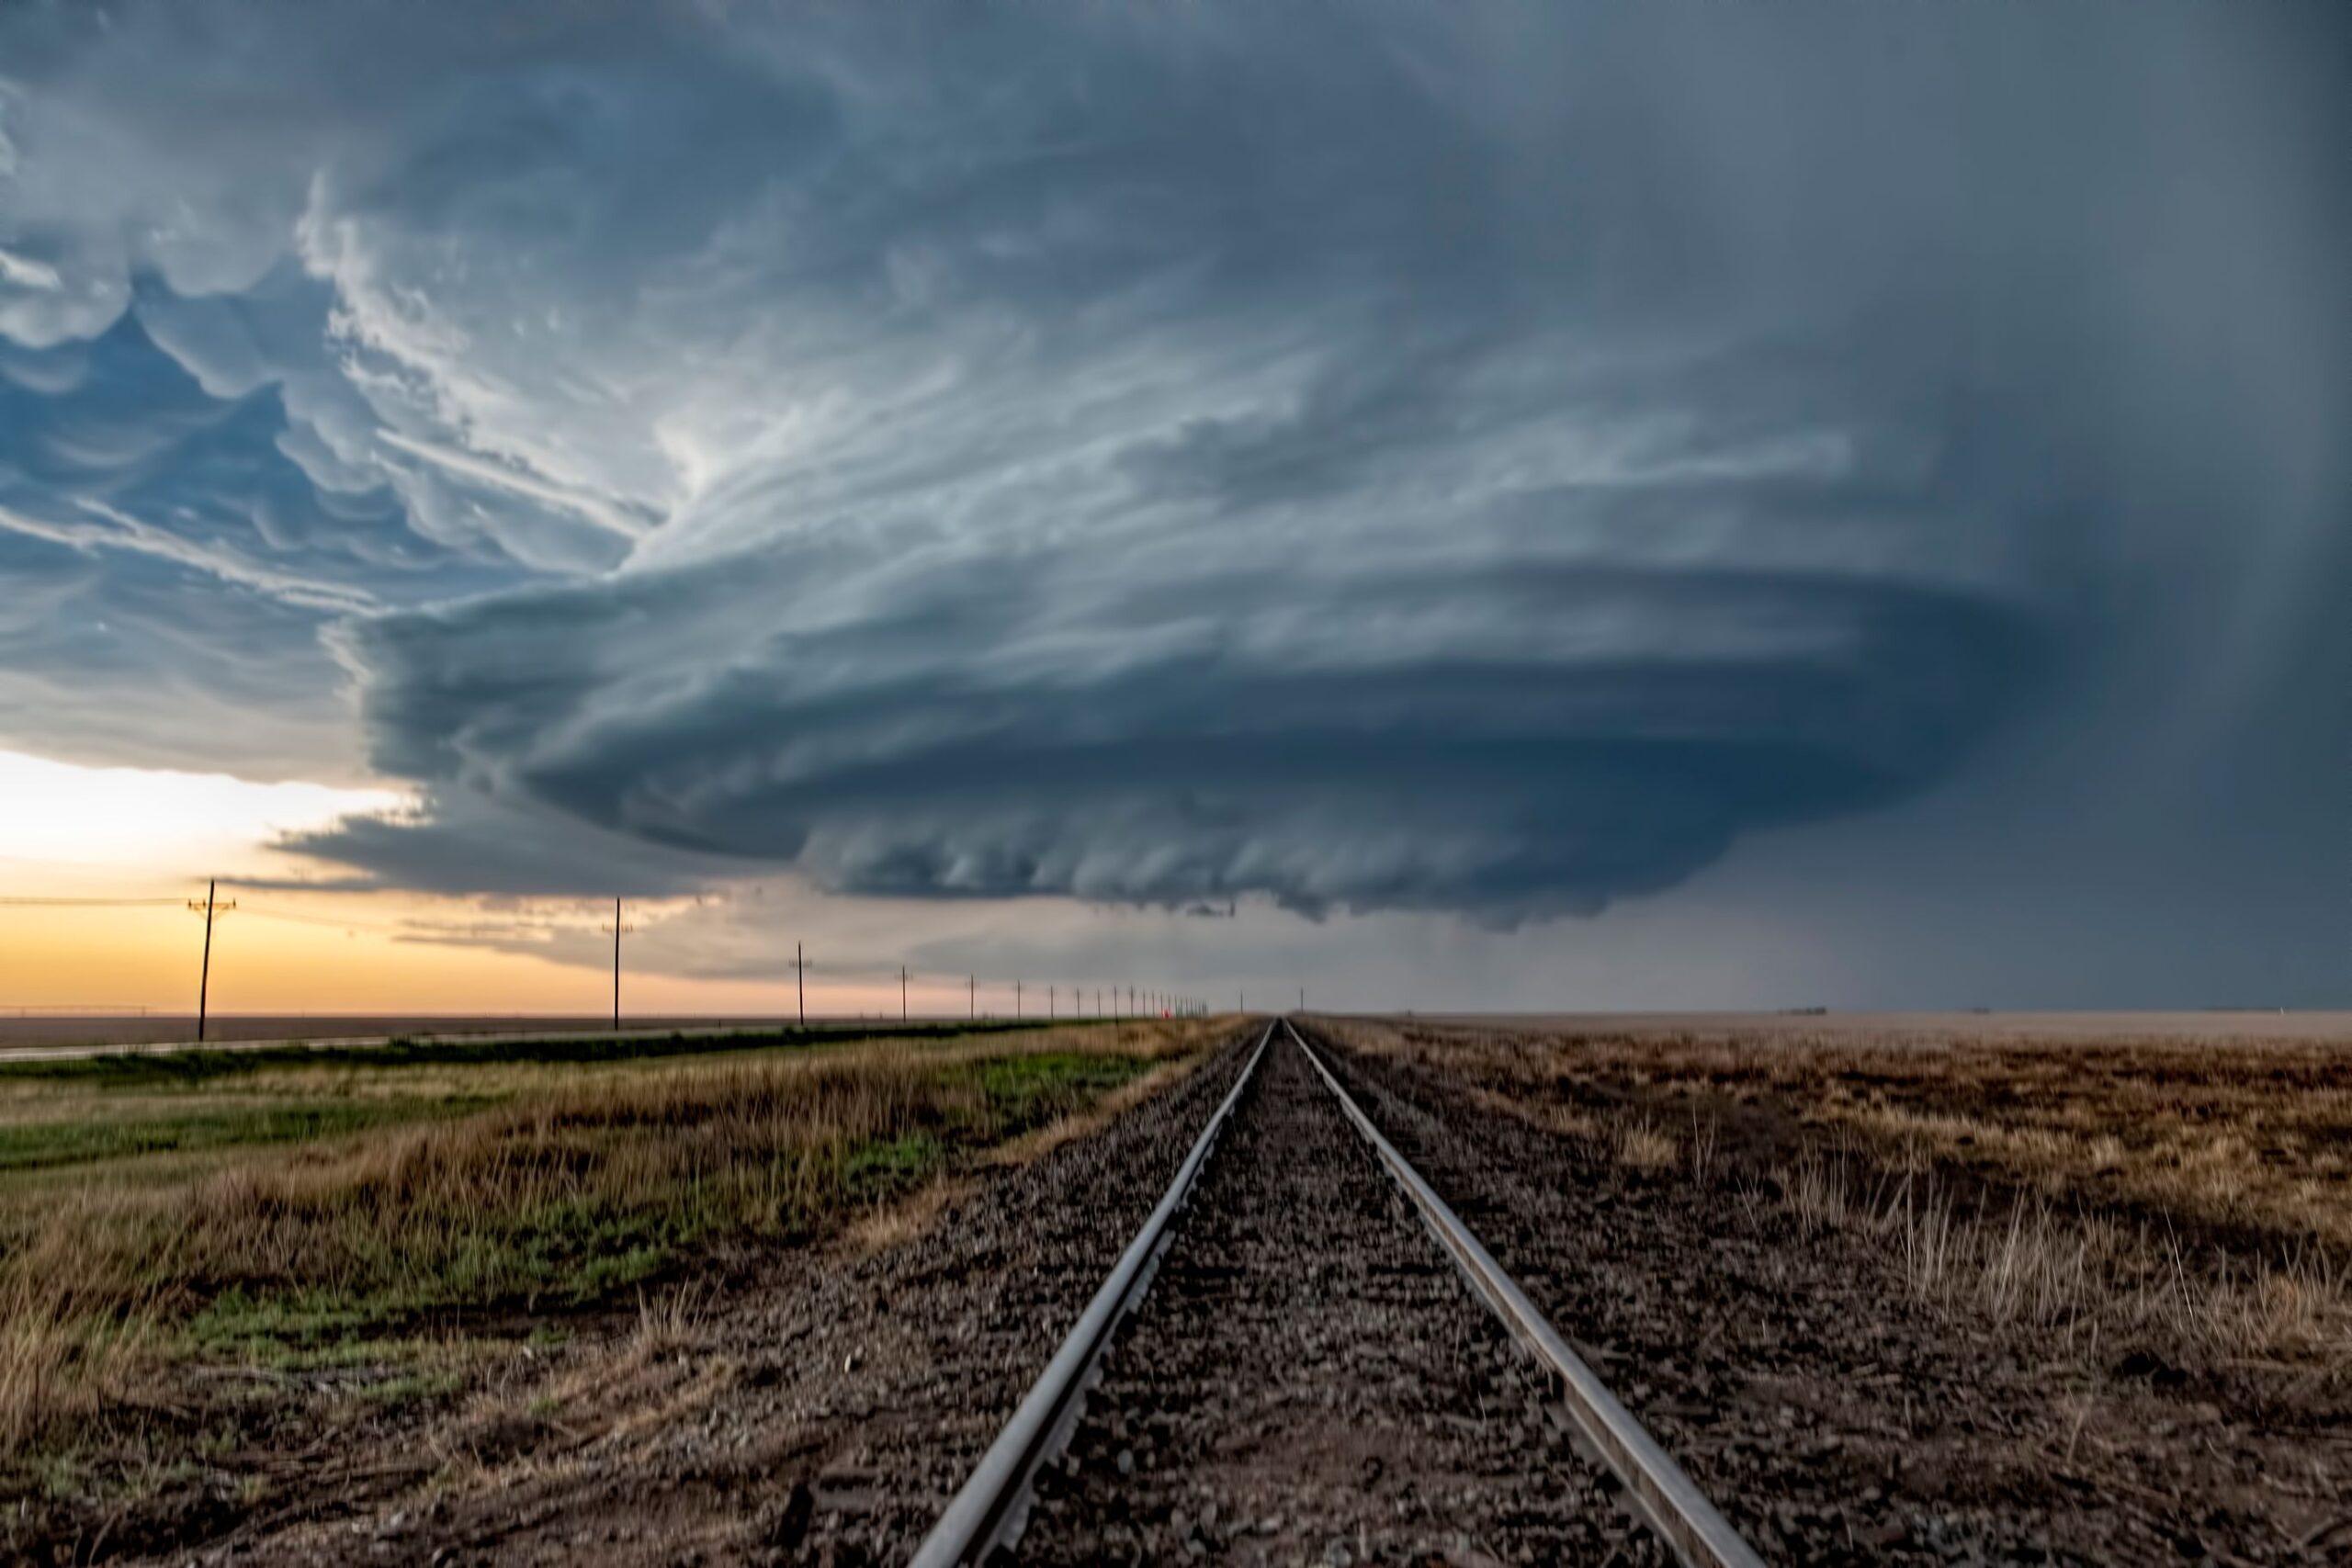 A developing supercell thunderstorm moved over Satanta Kansas near sunset.